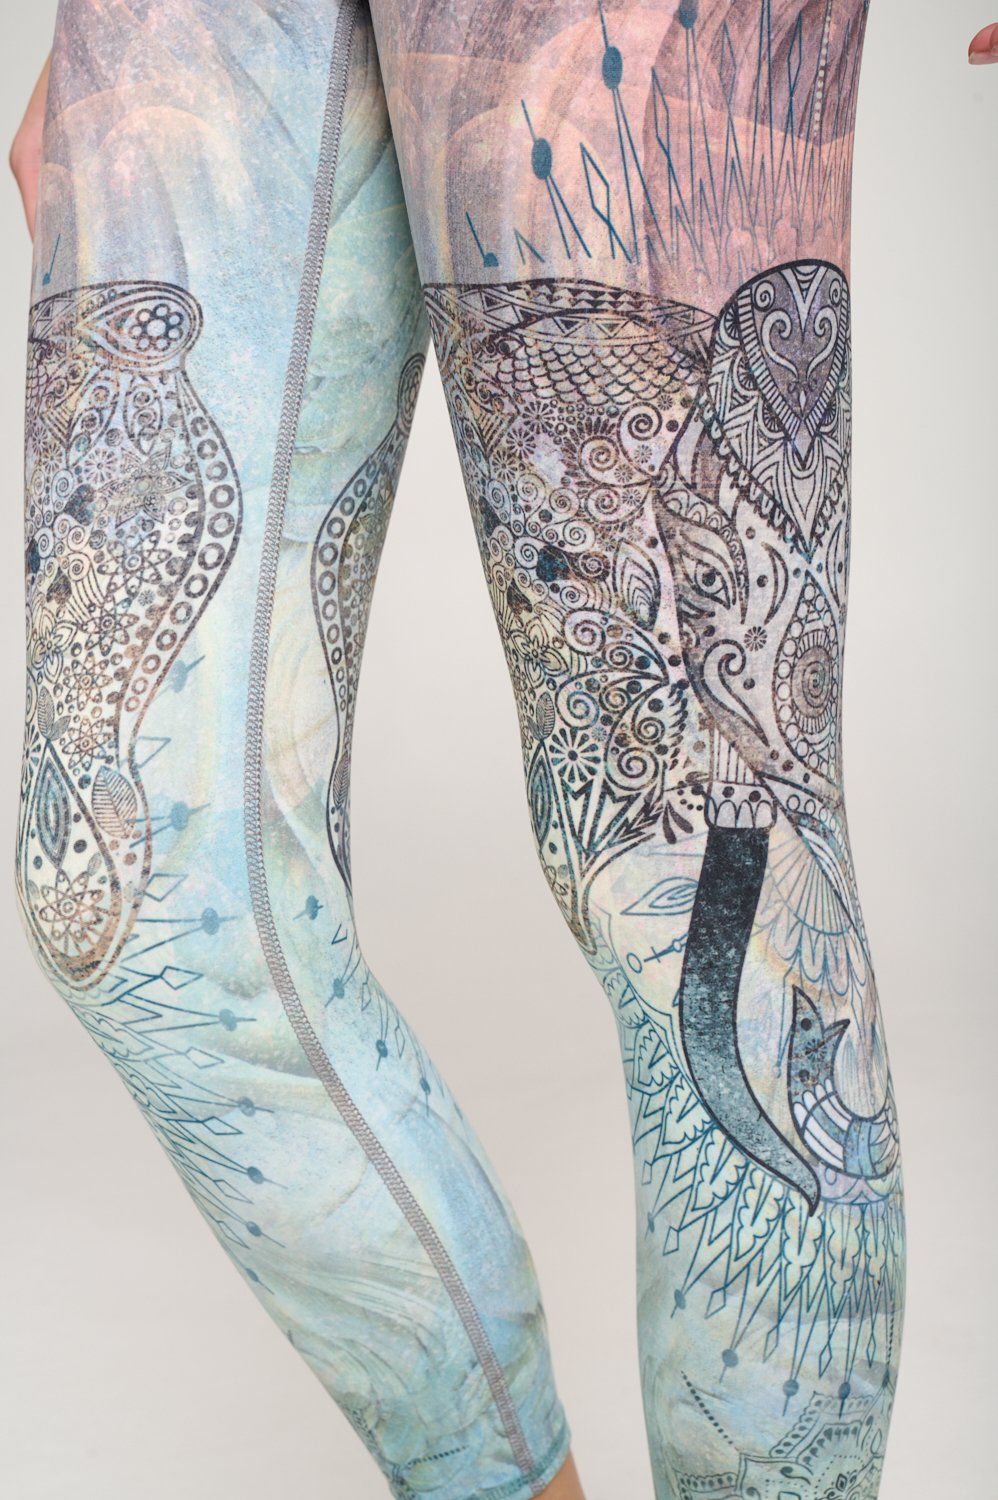 Evolution and creation Women's Colorful Elephant Mandela Print Leggings  Size M Size M - $18 - From Heidi